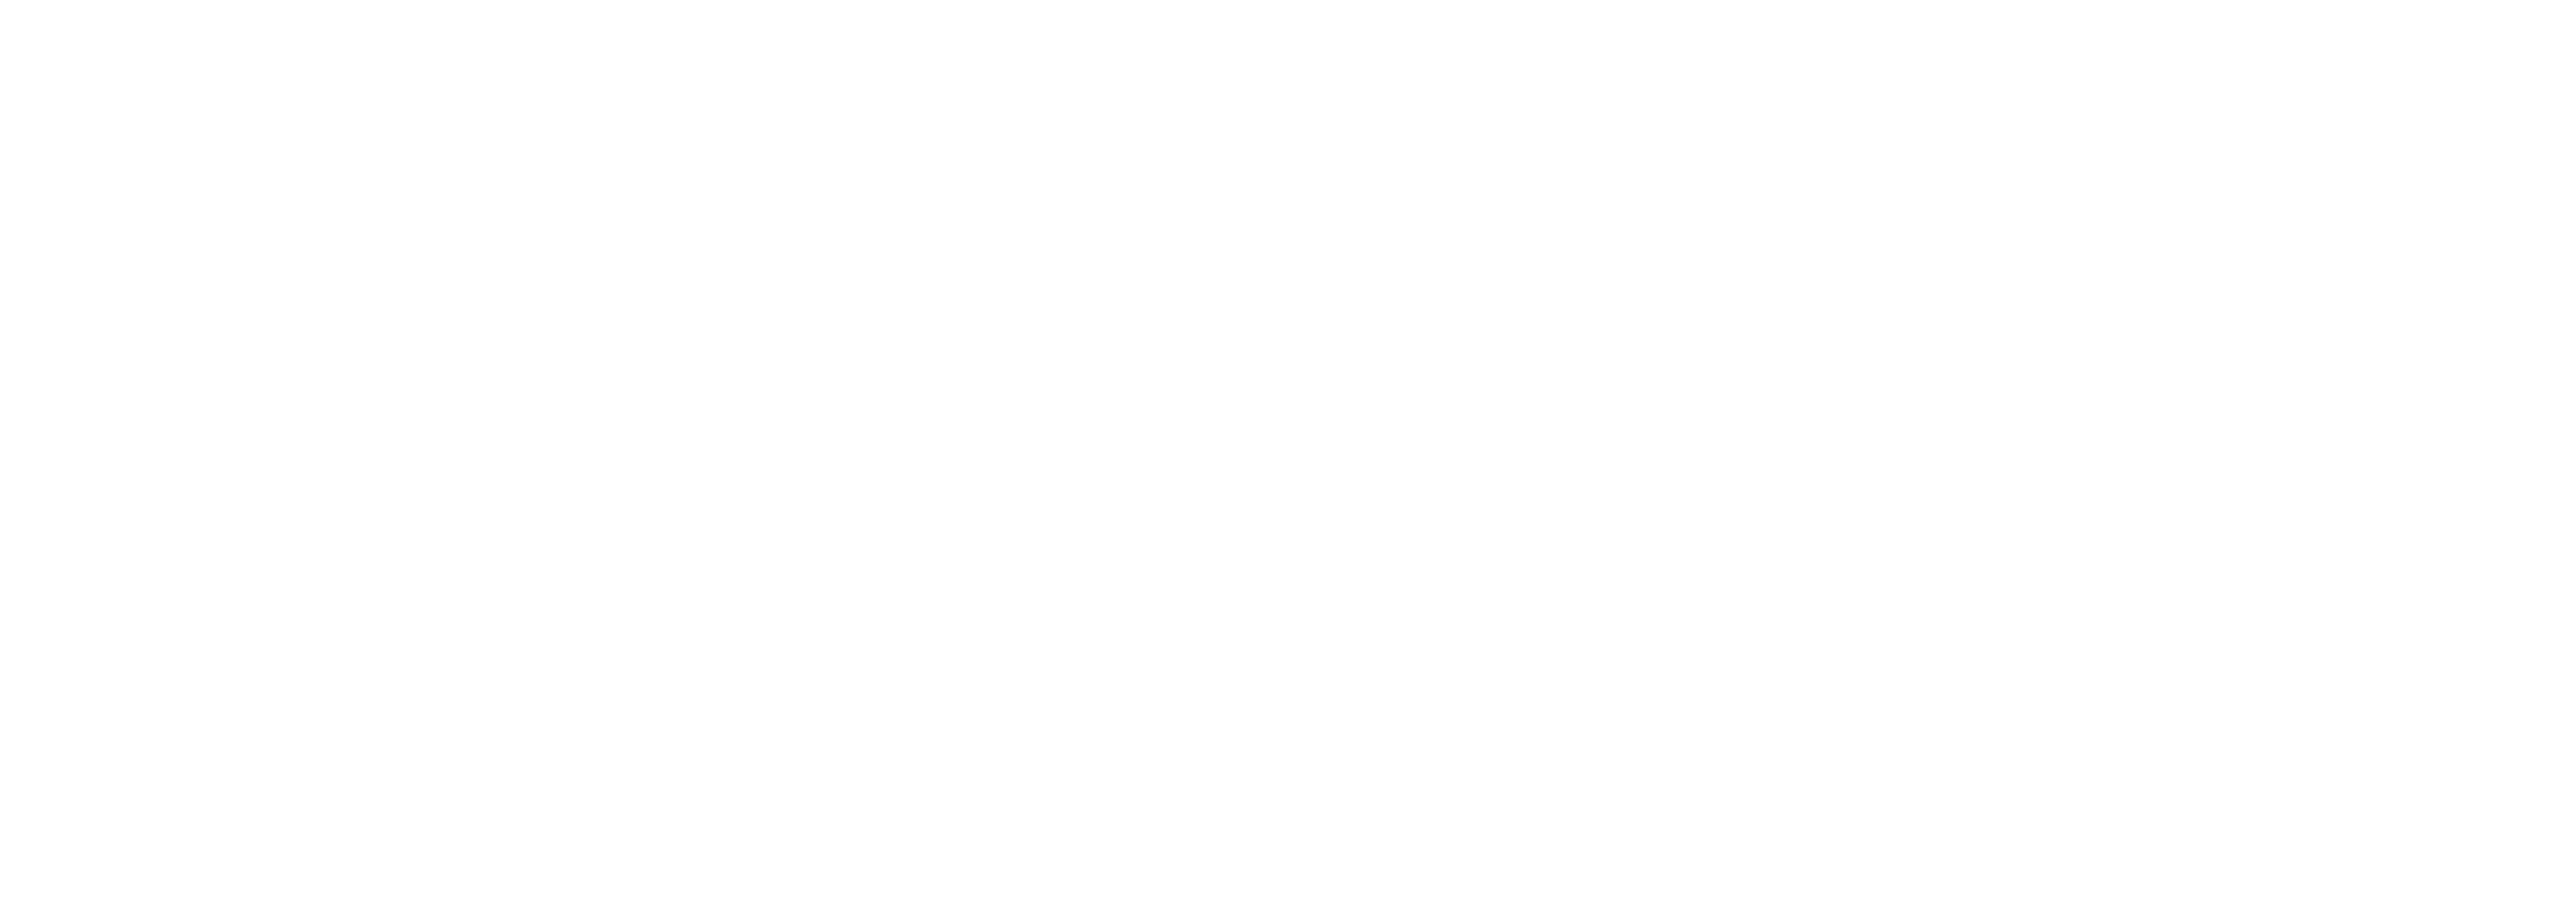 The Dark Blade by Wojtek Rosiński